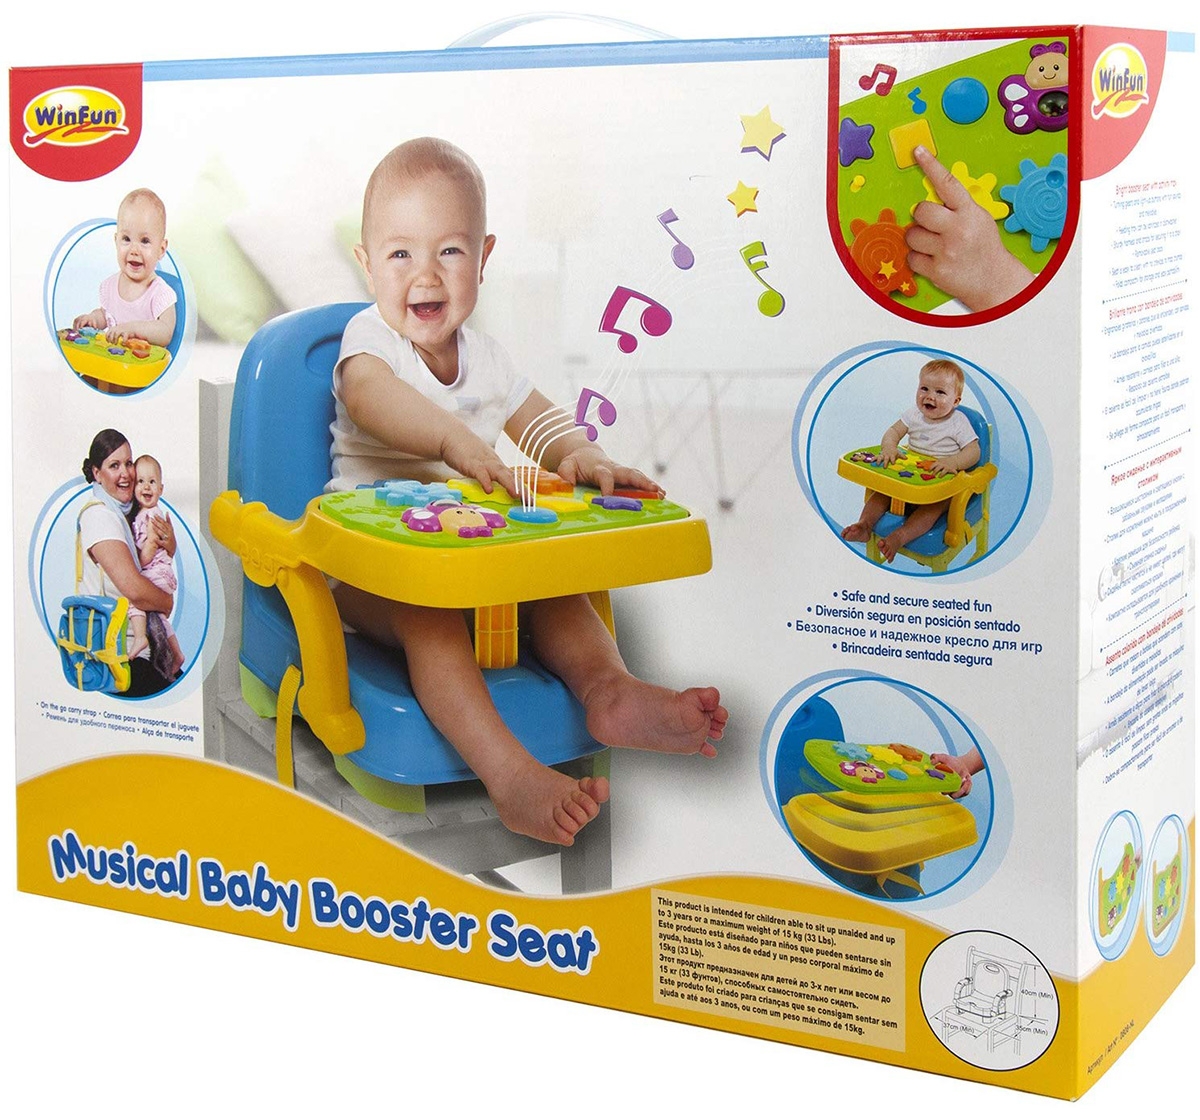 WinFun | Winfun Musical Baby Booster Seat, Multi Color 2